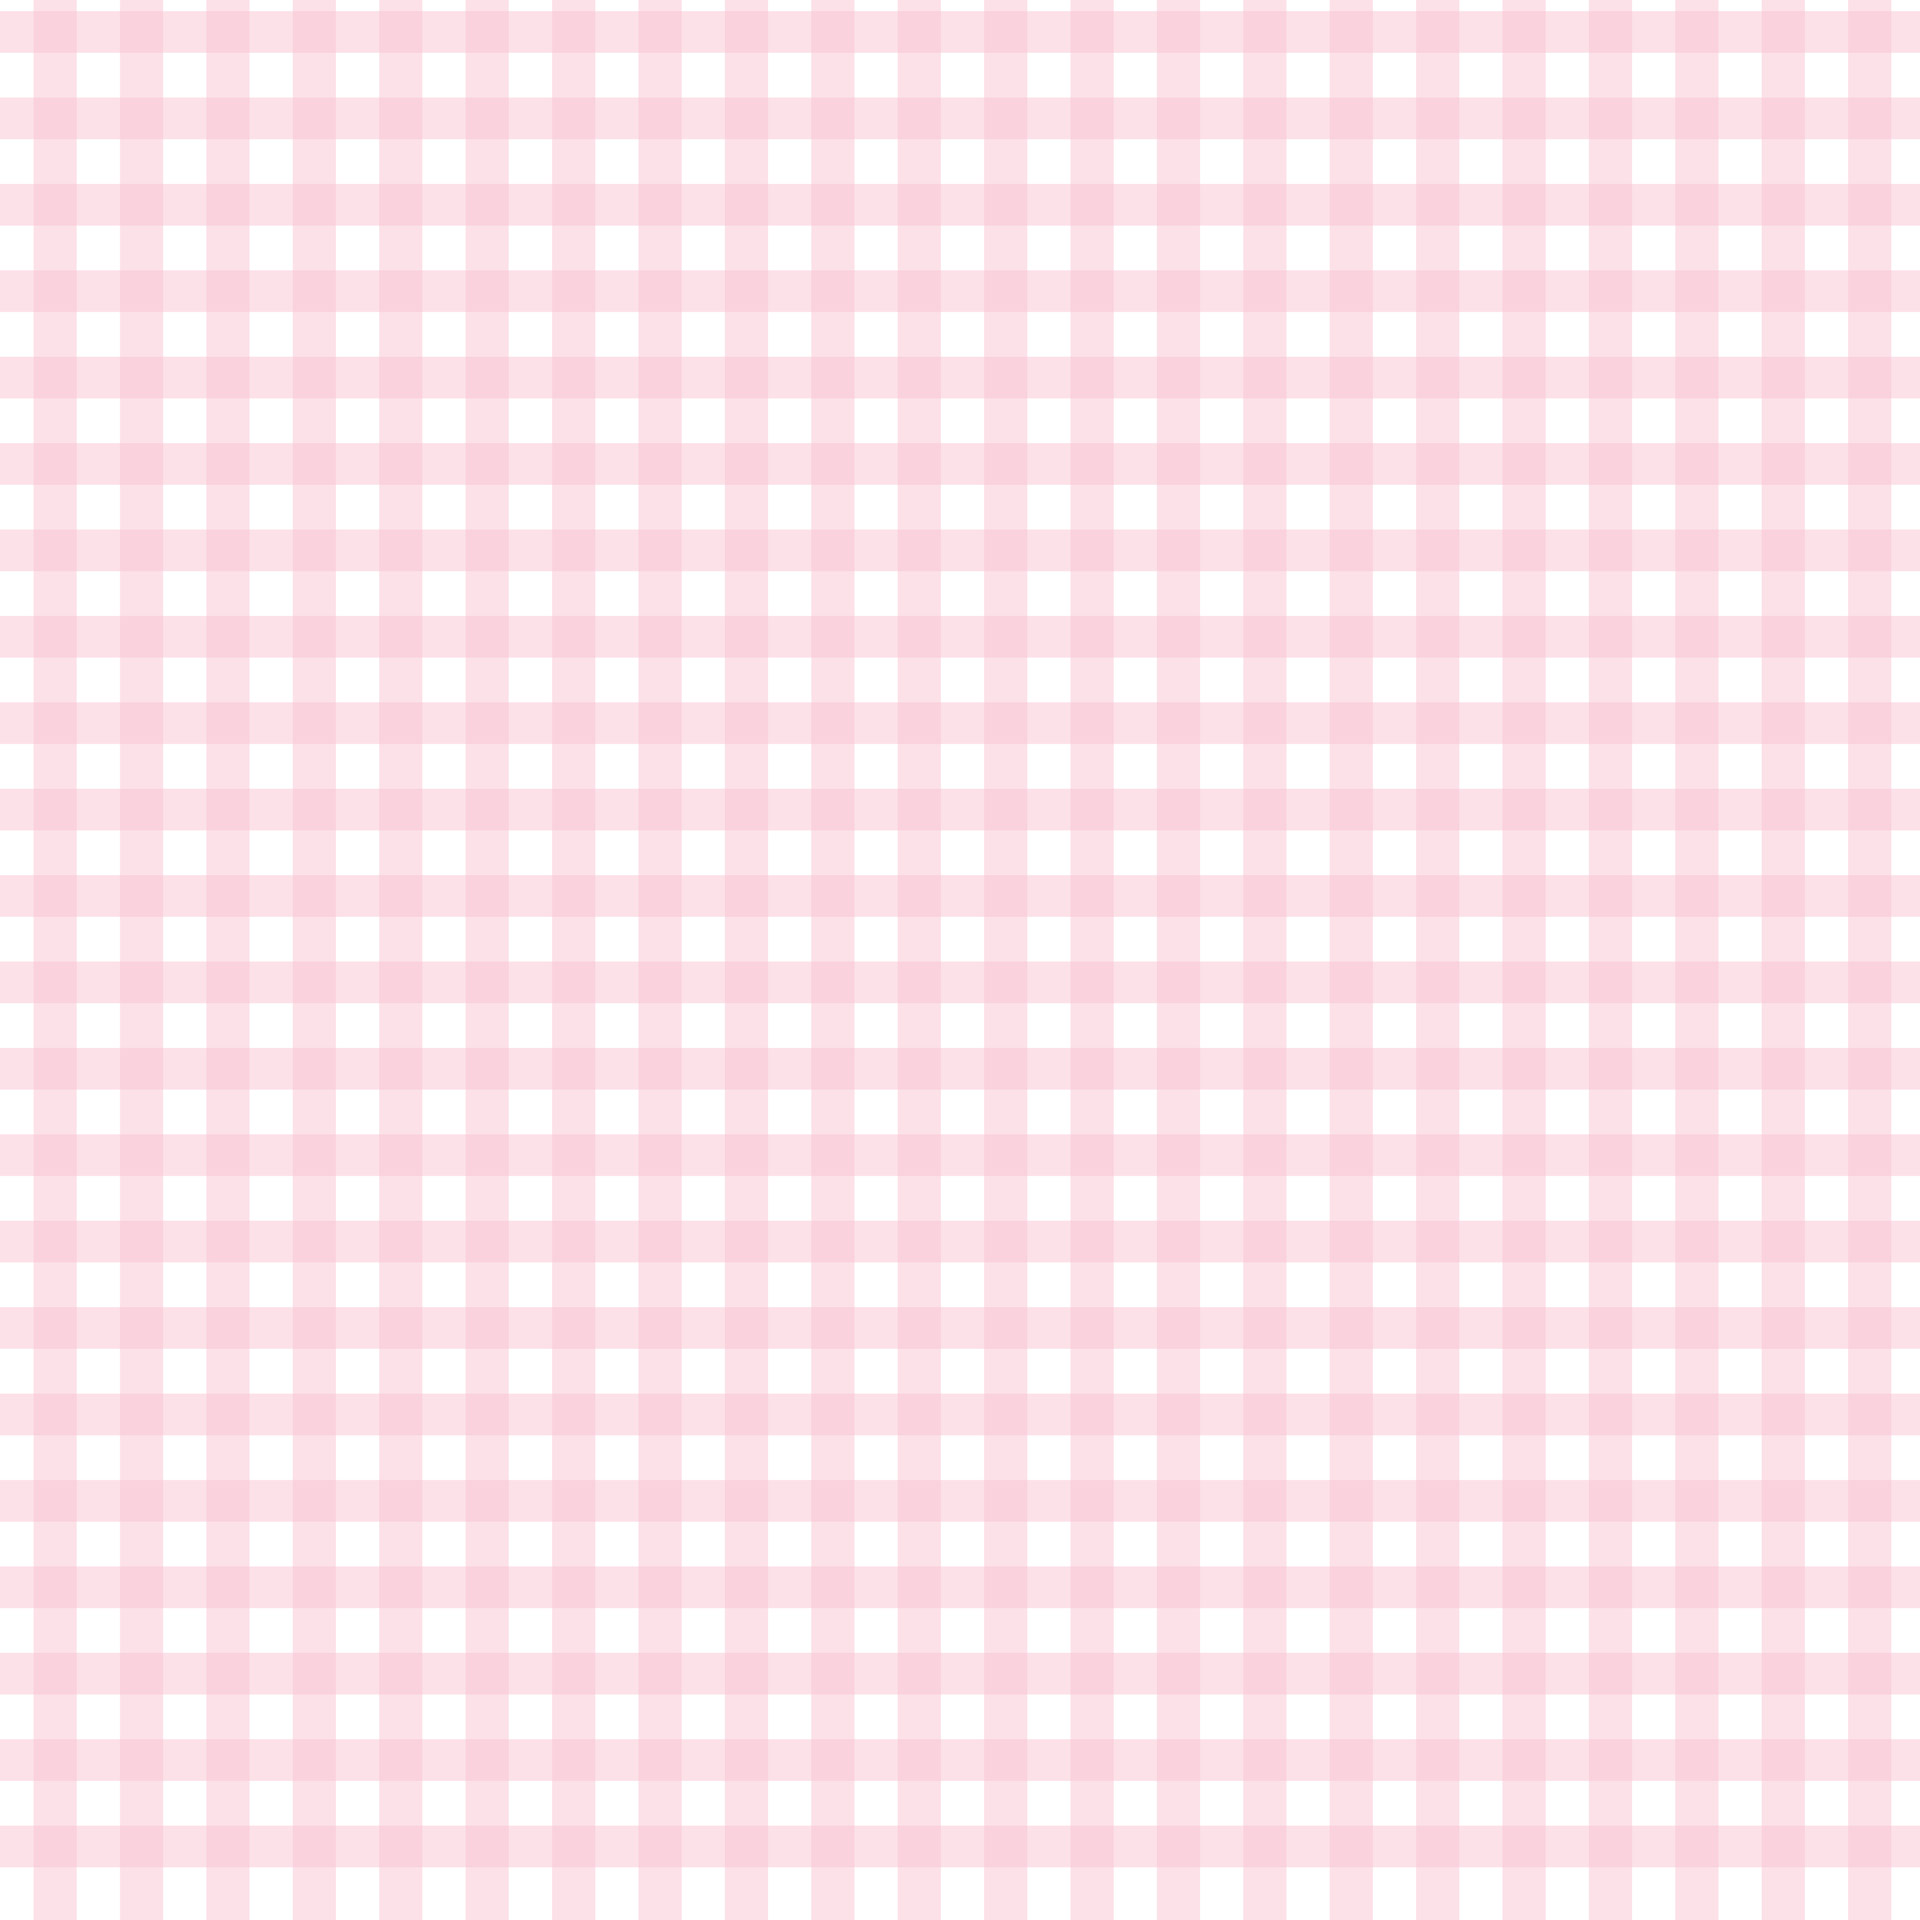 Pastel Pink Seamless Background Free Stock Photo - Public Domain